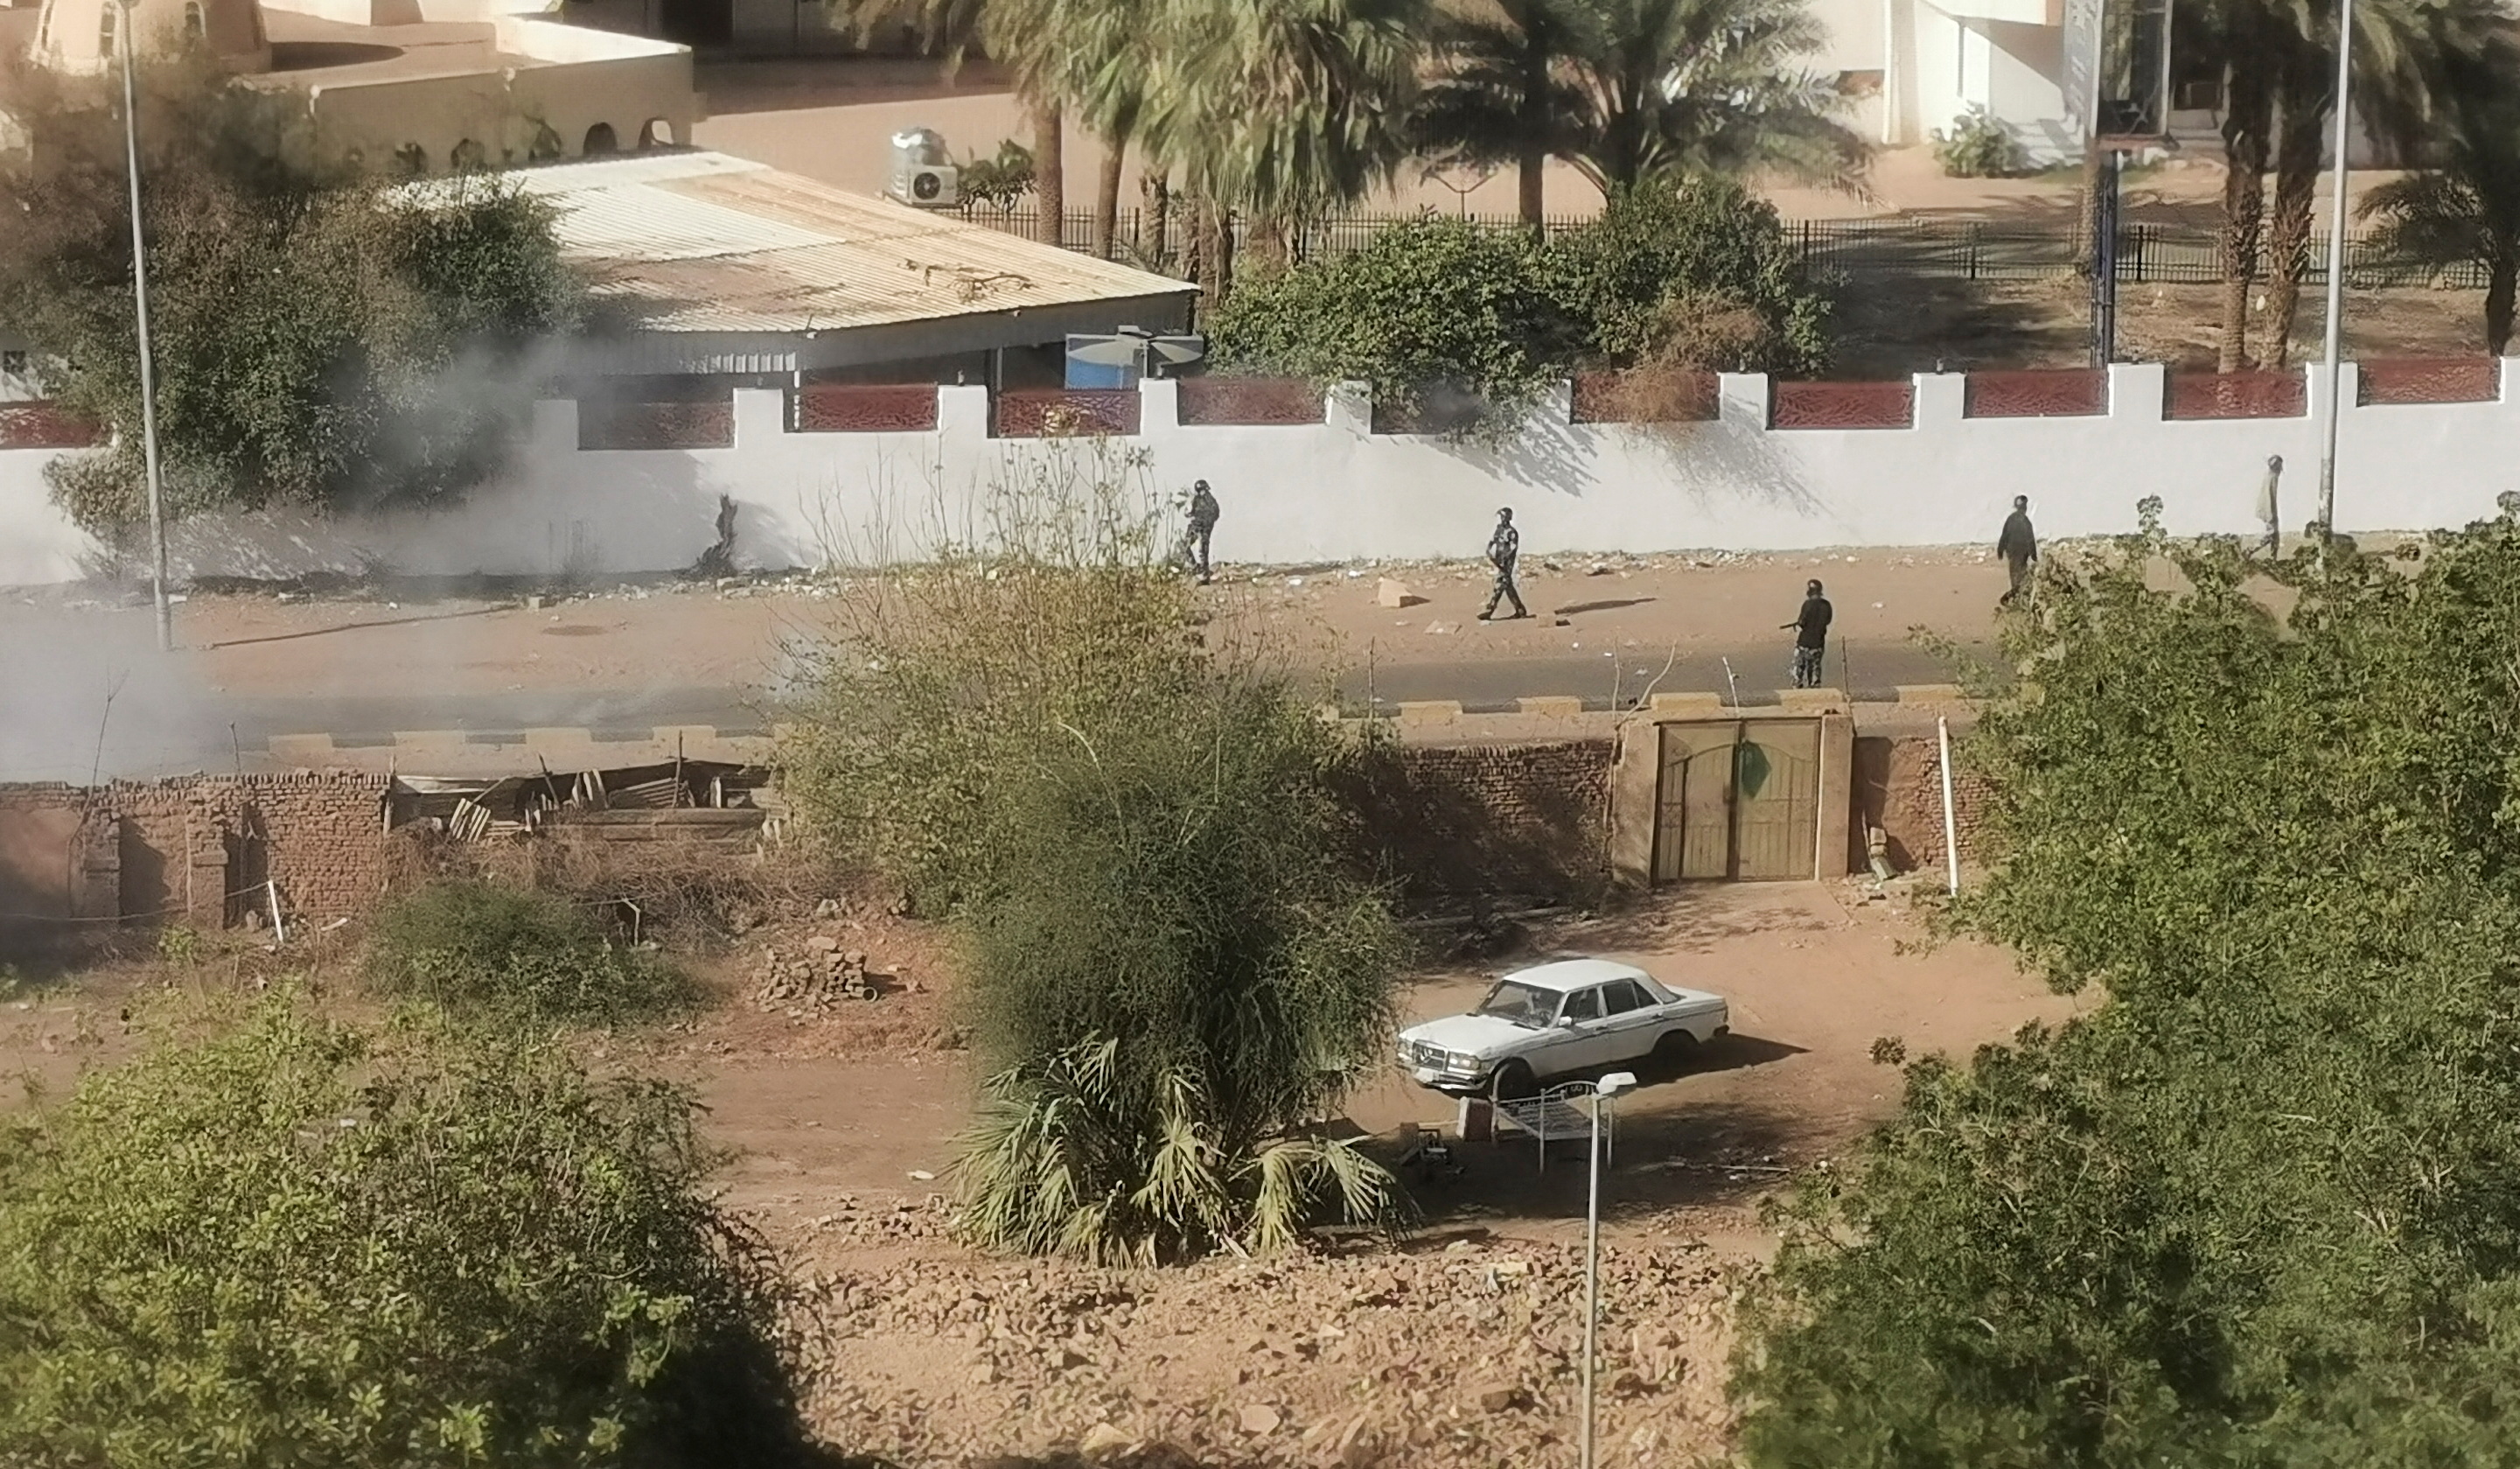 Protest against military rule, in Khartoum